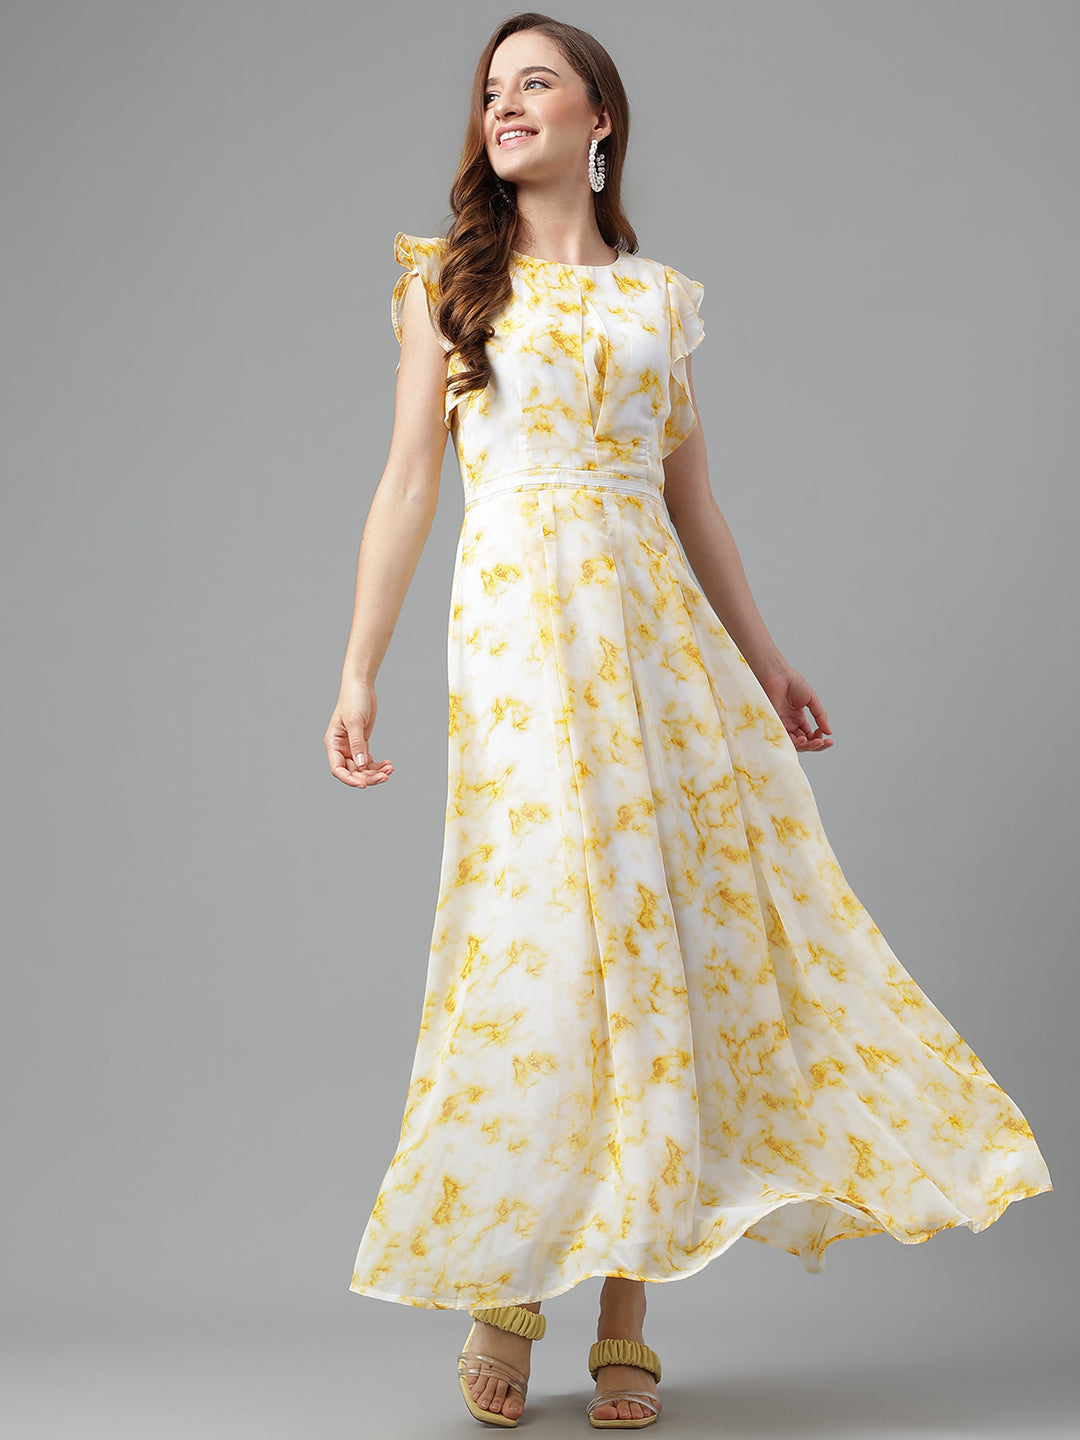 Yellow Cap Sleeve Printed Dress